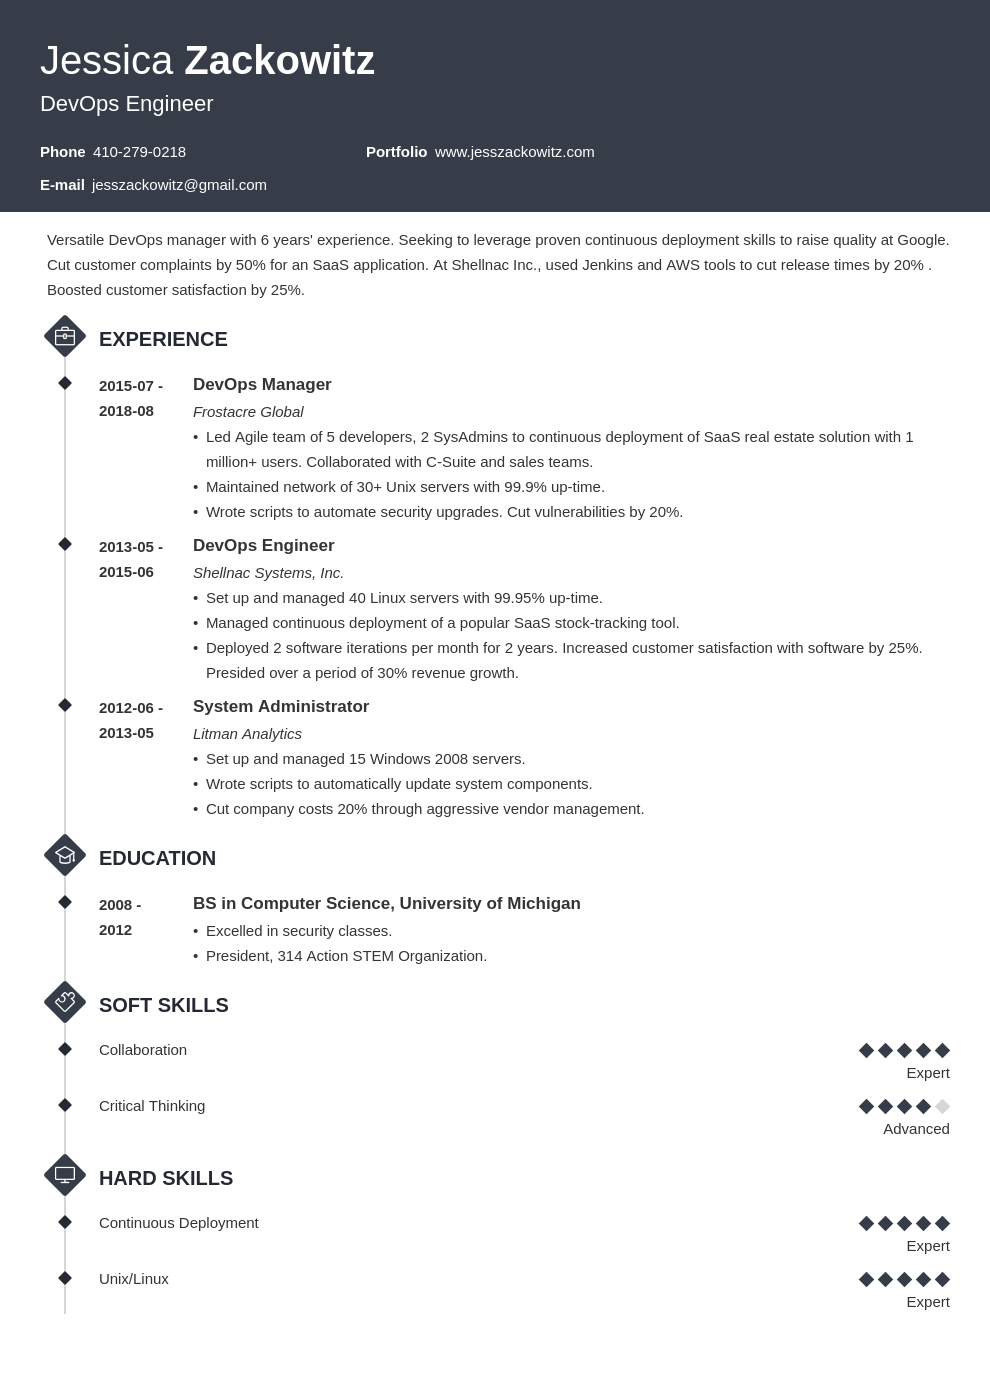 DevOps Engineer Resume Sample & Guide (20+ Tips)